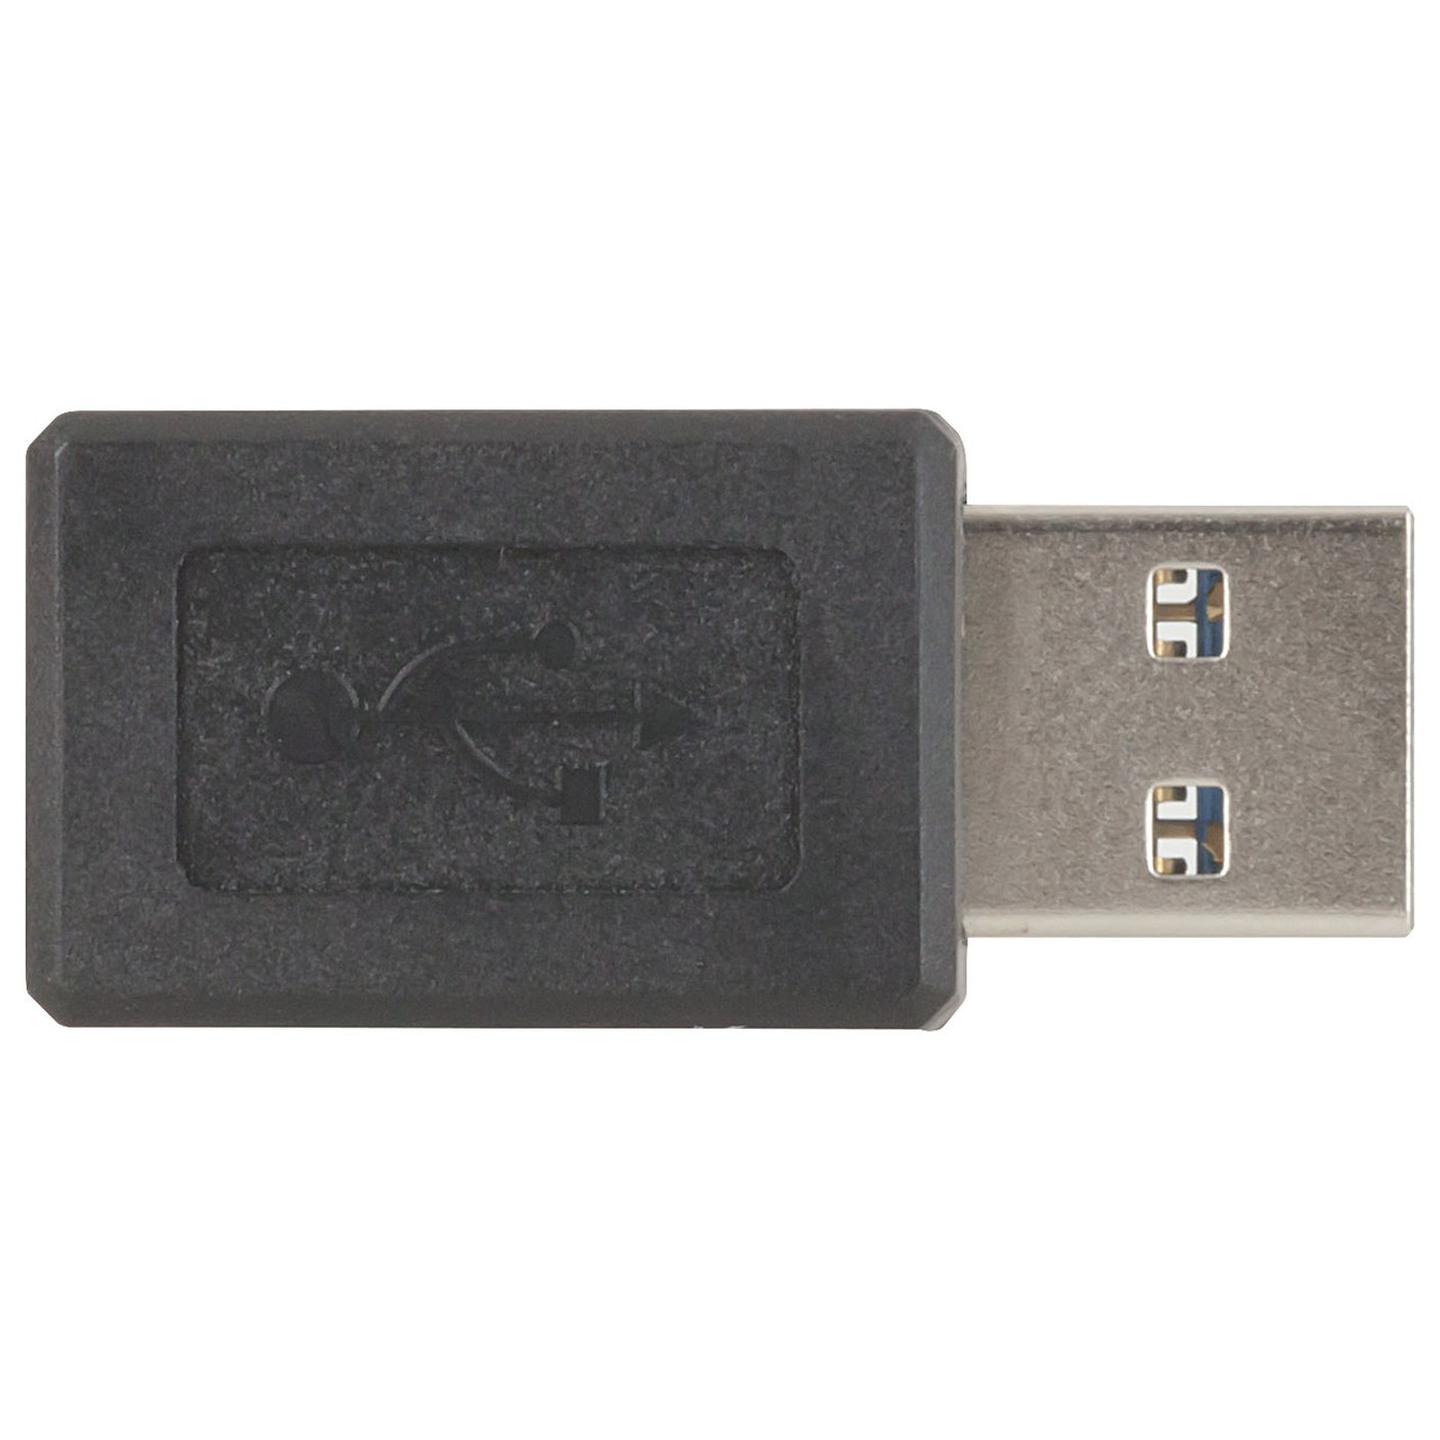 USB 3.0 A Plug to Type-C Socket Adaptor